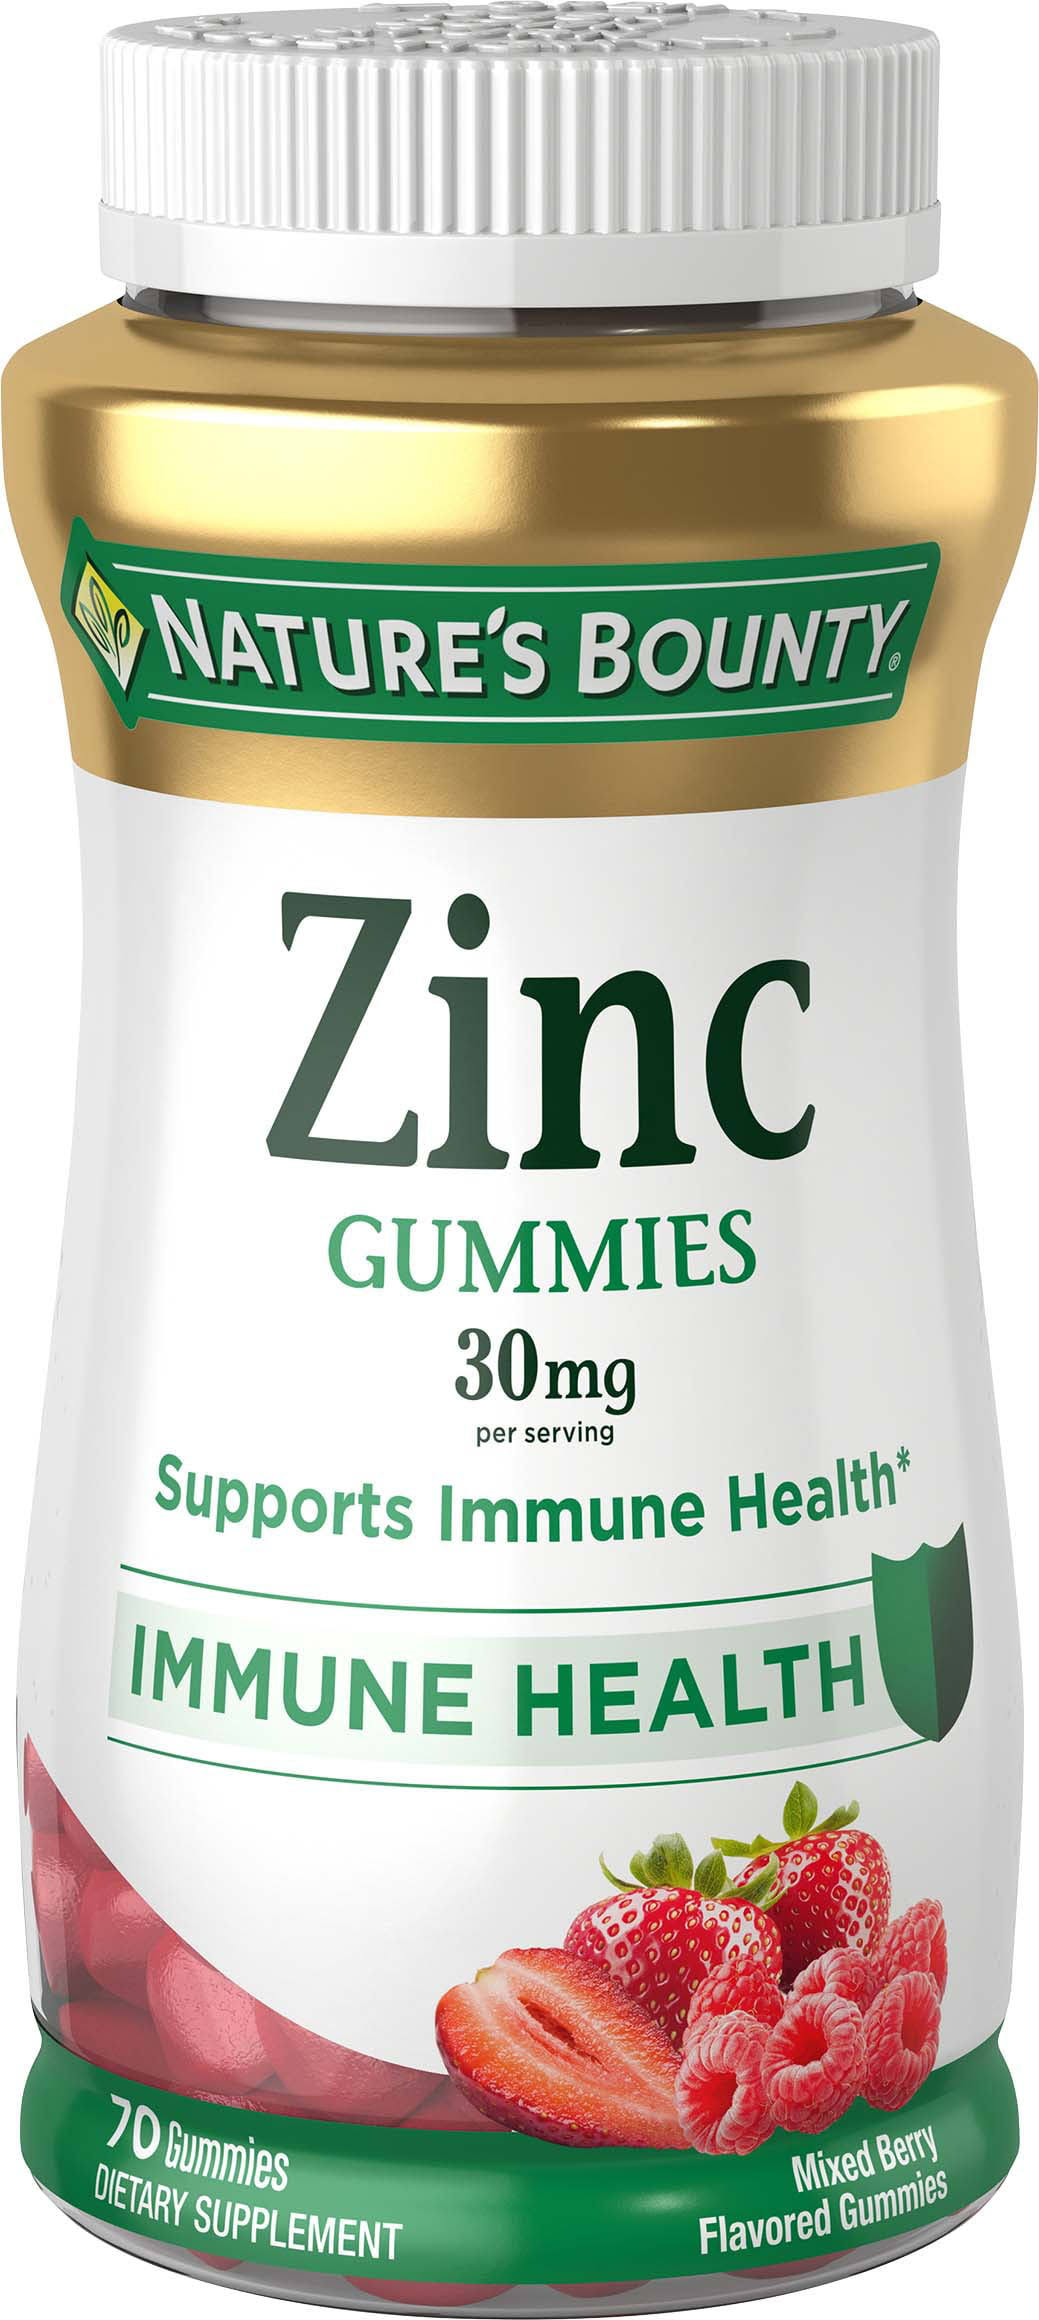 Nature's Bounty, Zinc Gummies, Mixed Berry, 30 mg, 70 Gummies